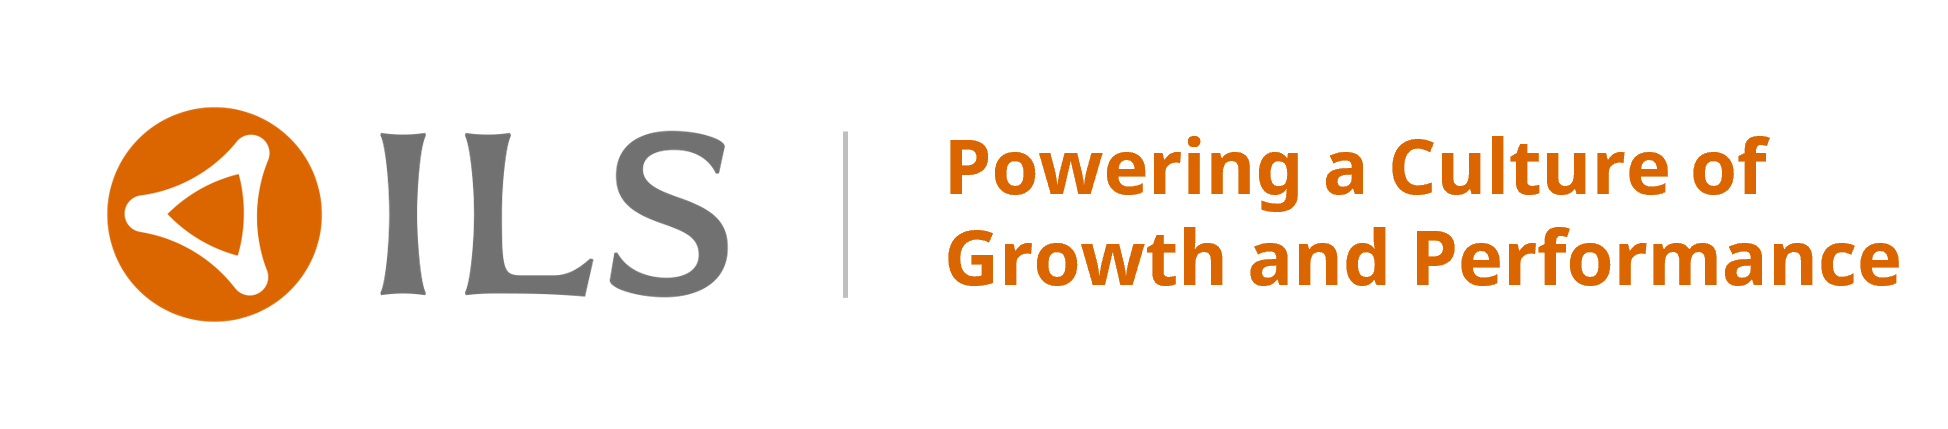 ILS-Logo_Orange_Competencytagline-FL